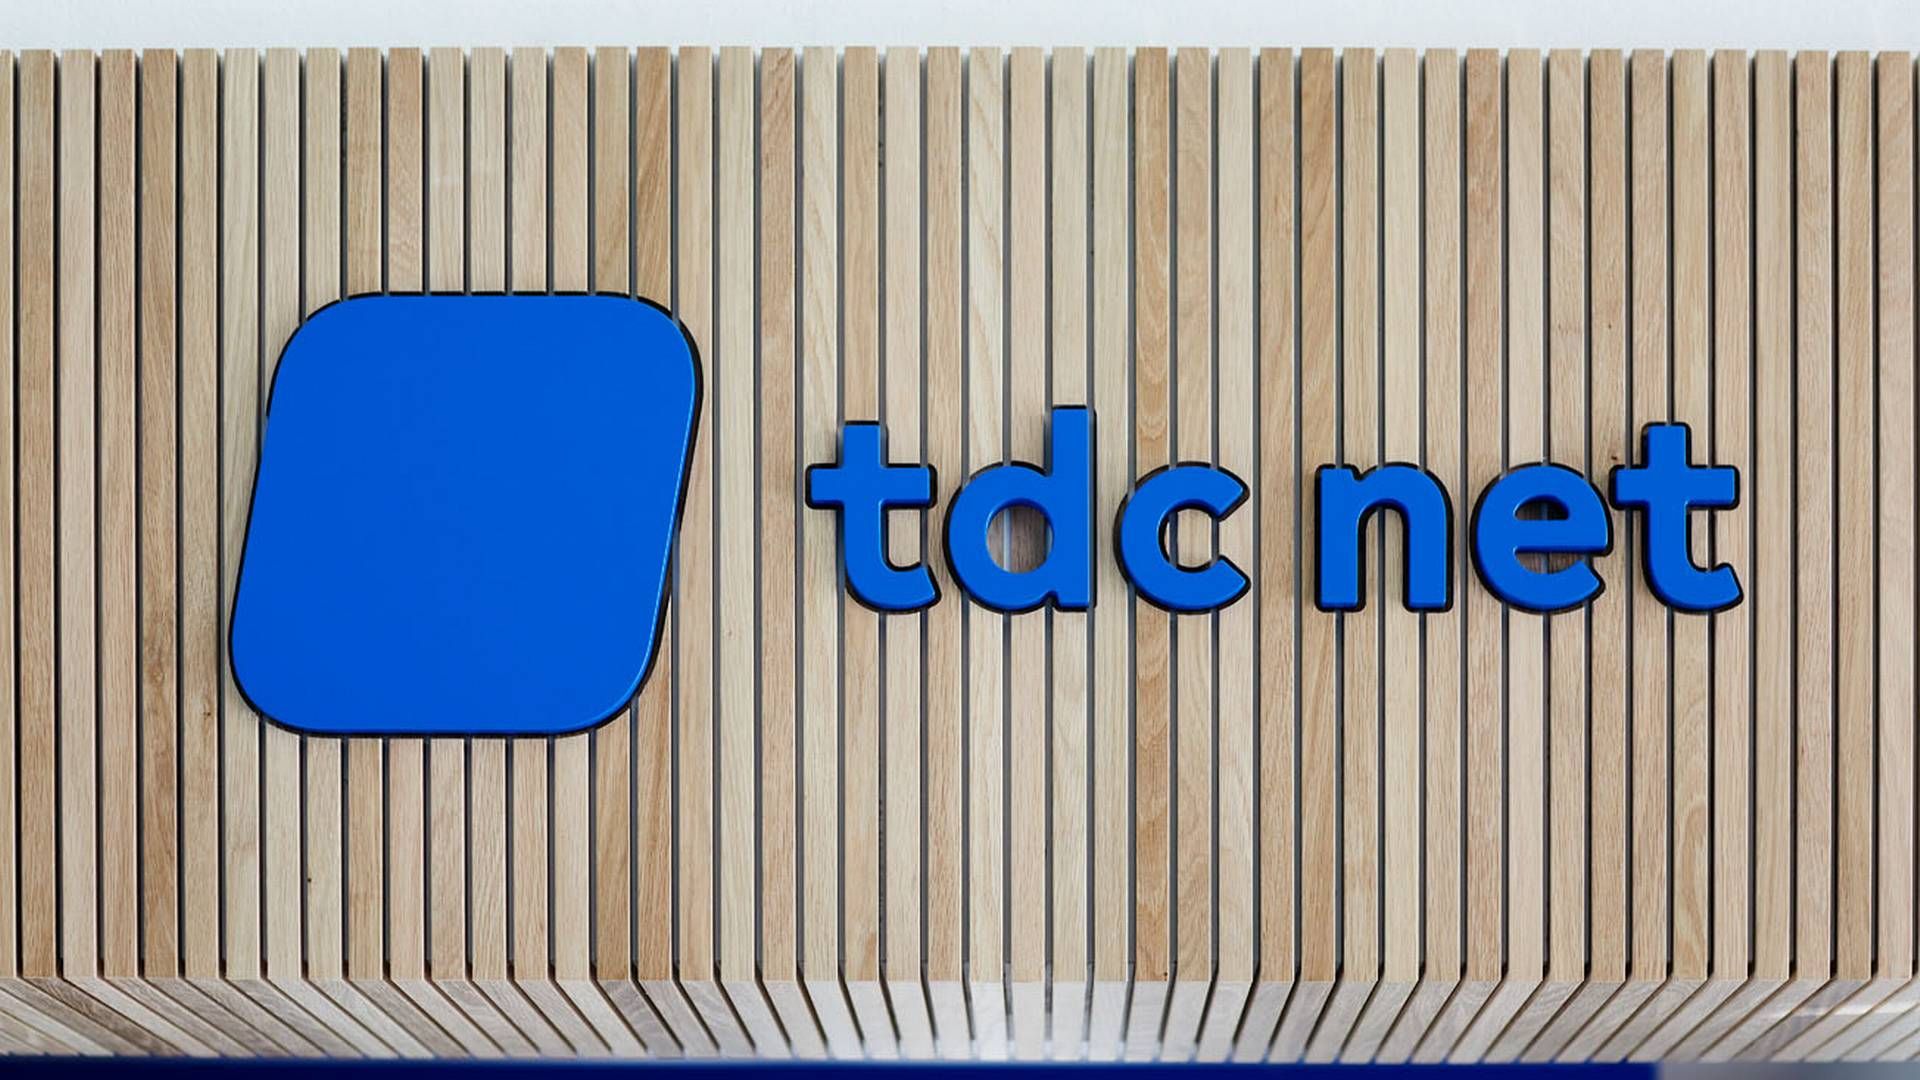 TDC Net har været på rov hos Nordea efter k-folk. | Foto: Pr